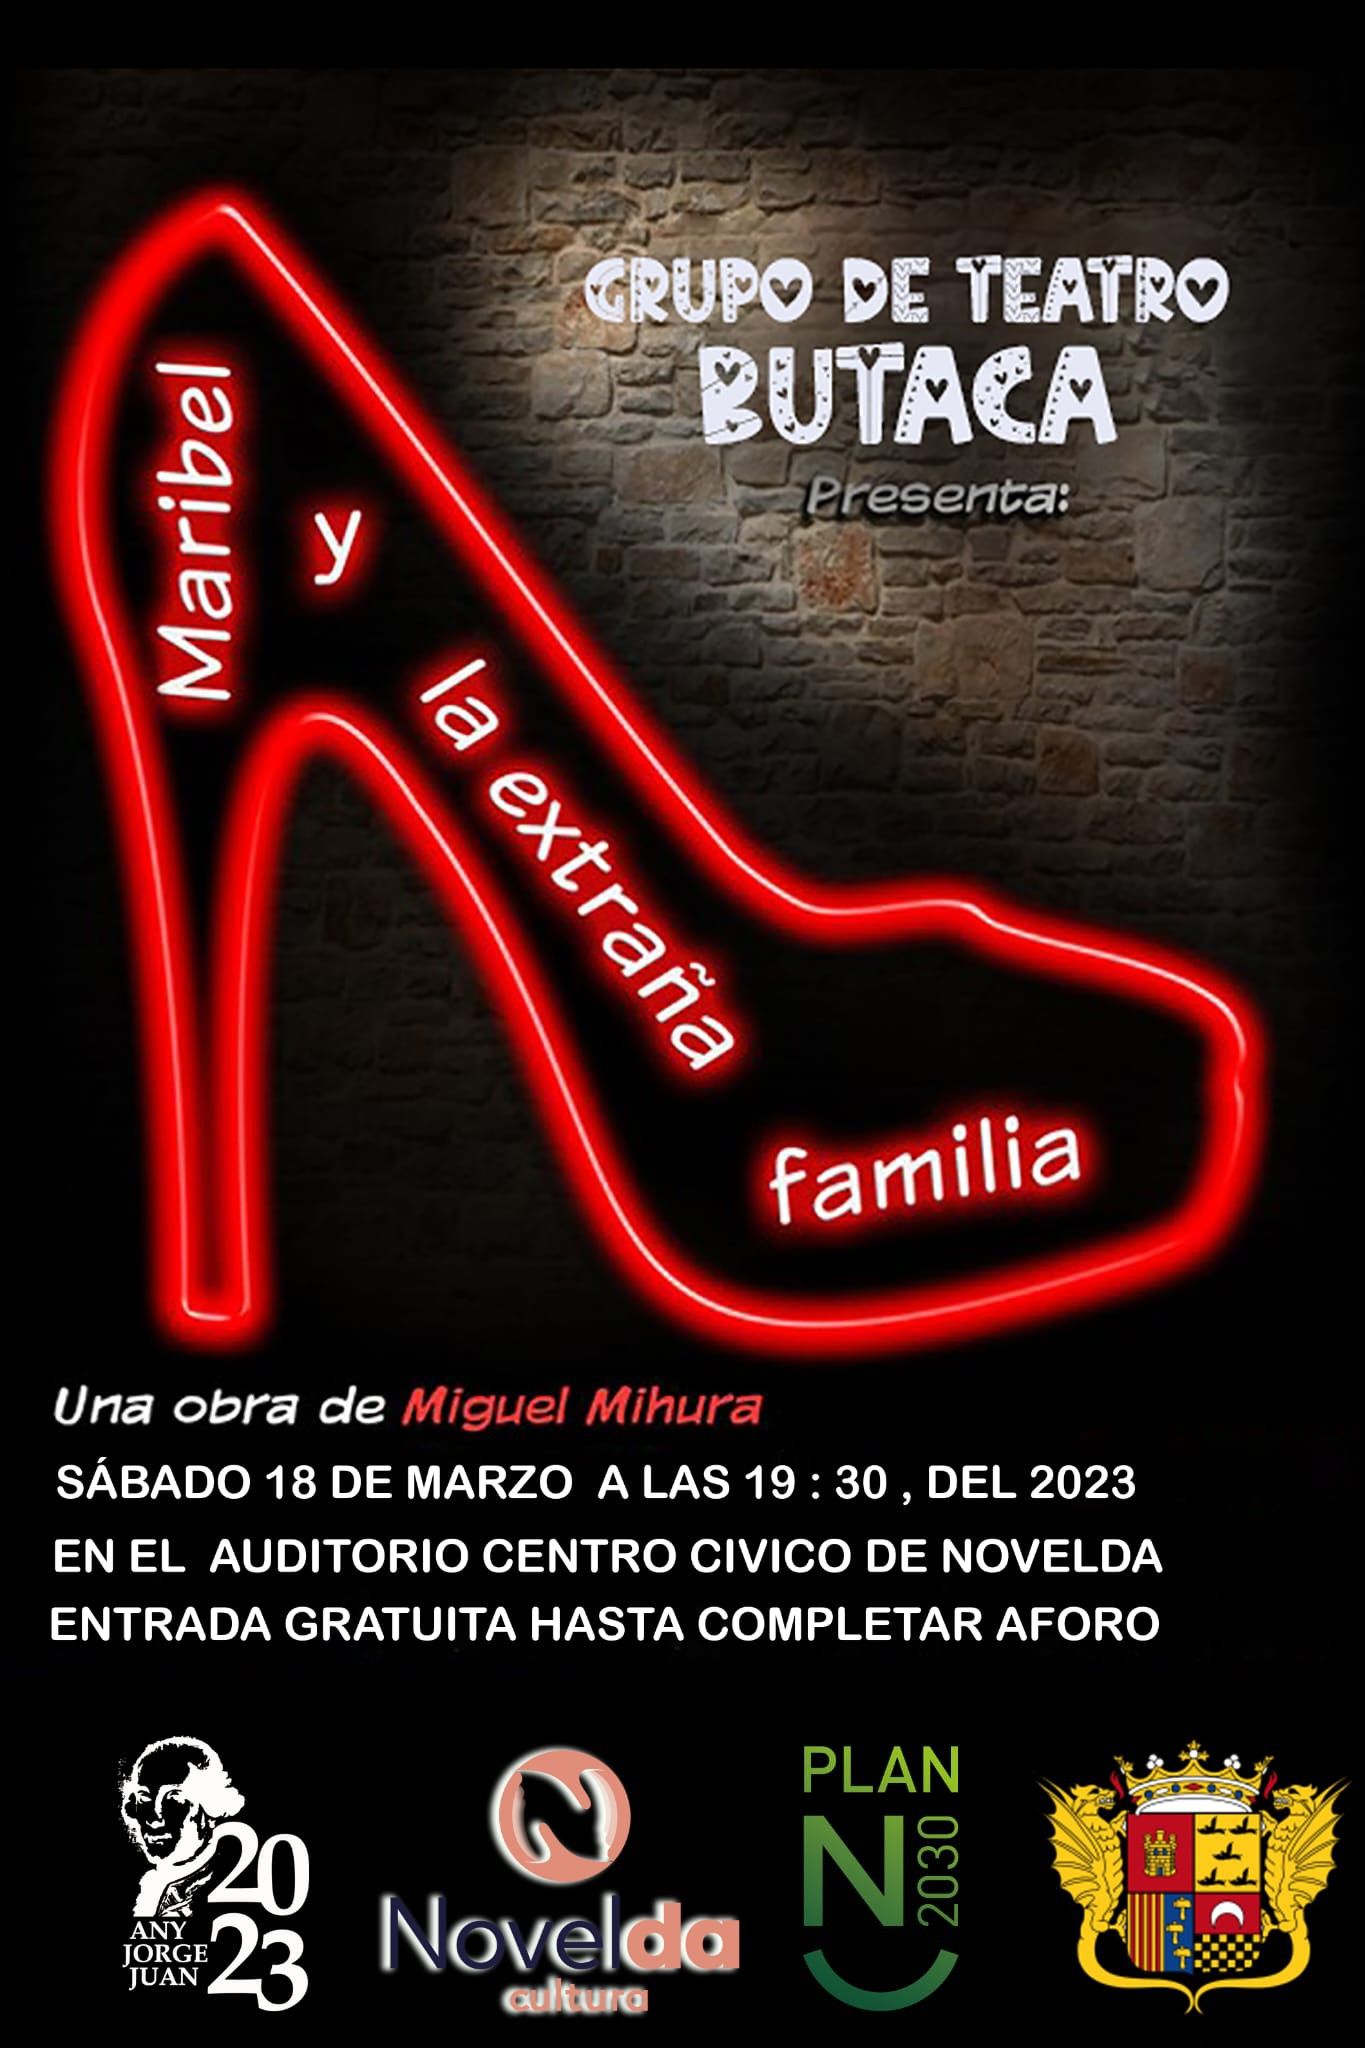 Ayuntamiento de Novelda Butaca Grup de teatre BUTACA presenta: "Maribel i l'extranya familia" 